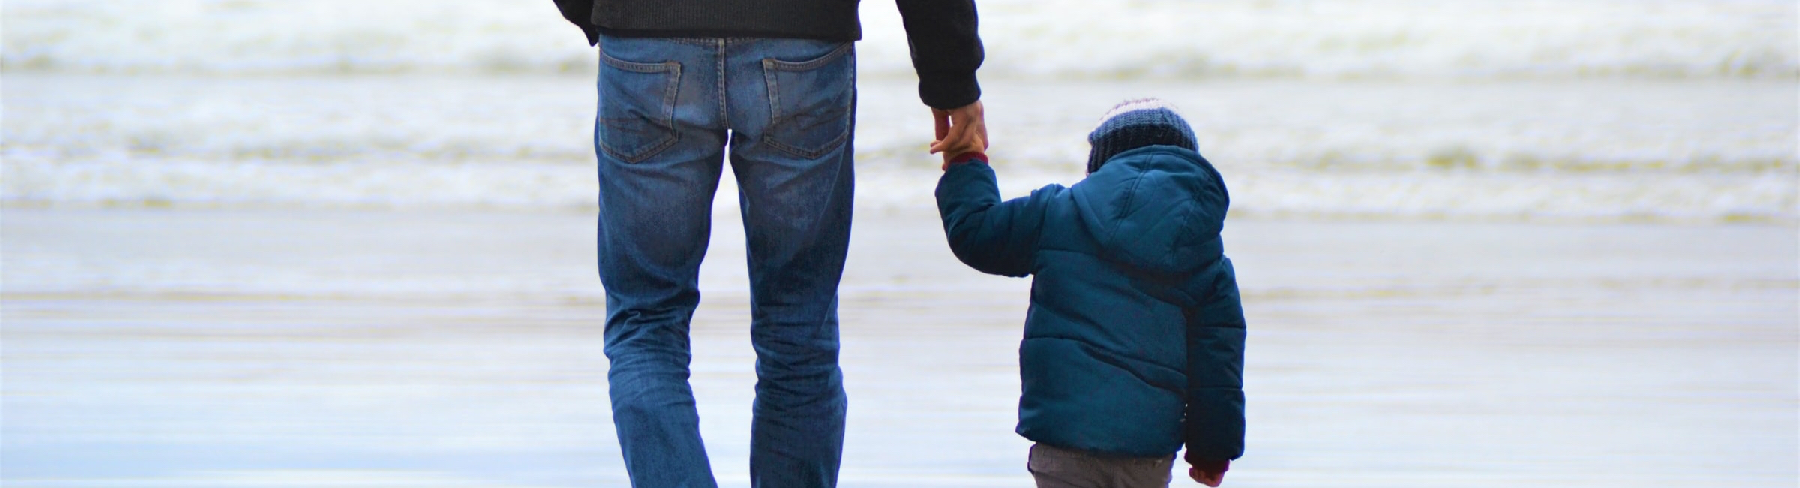 Man holding son's hand